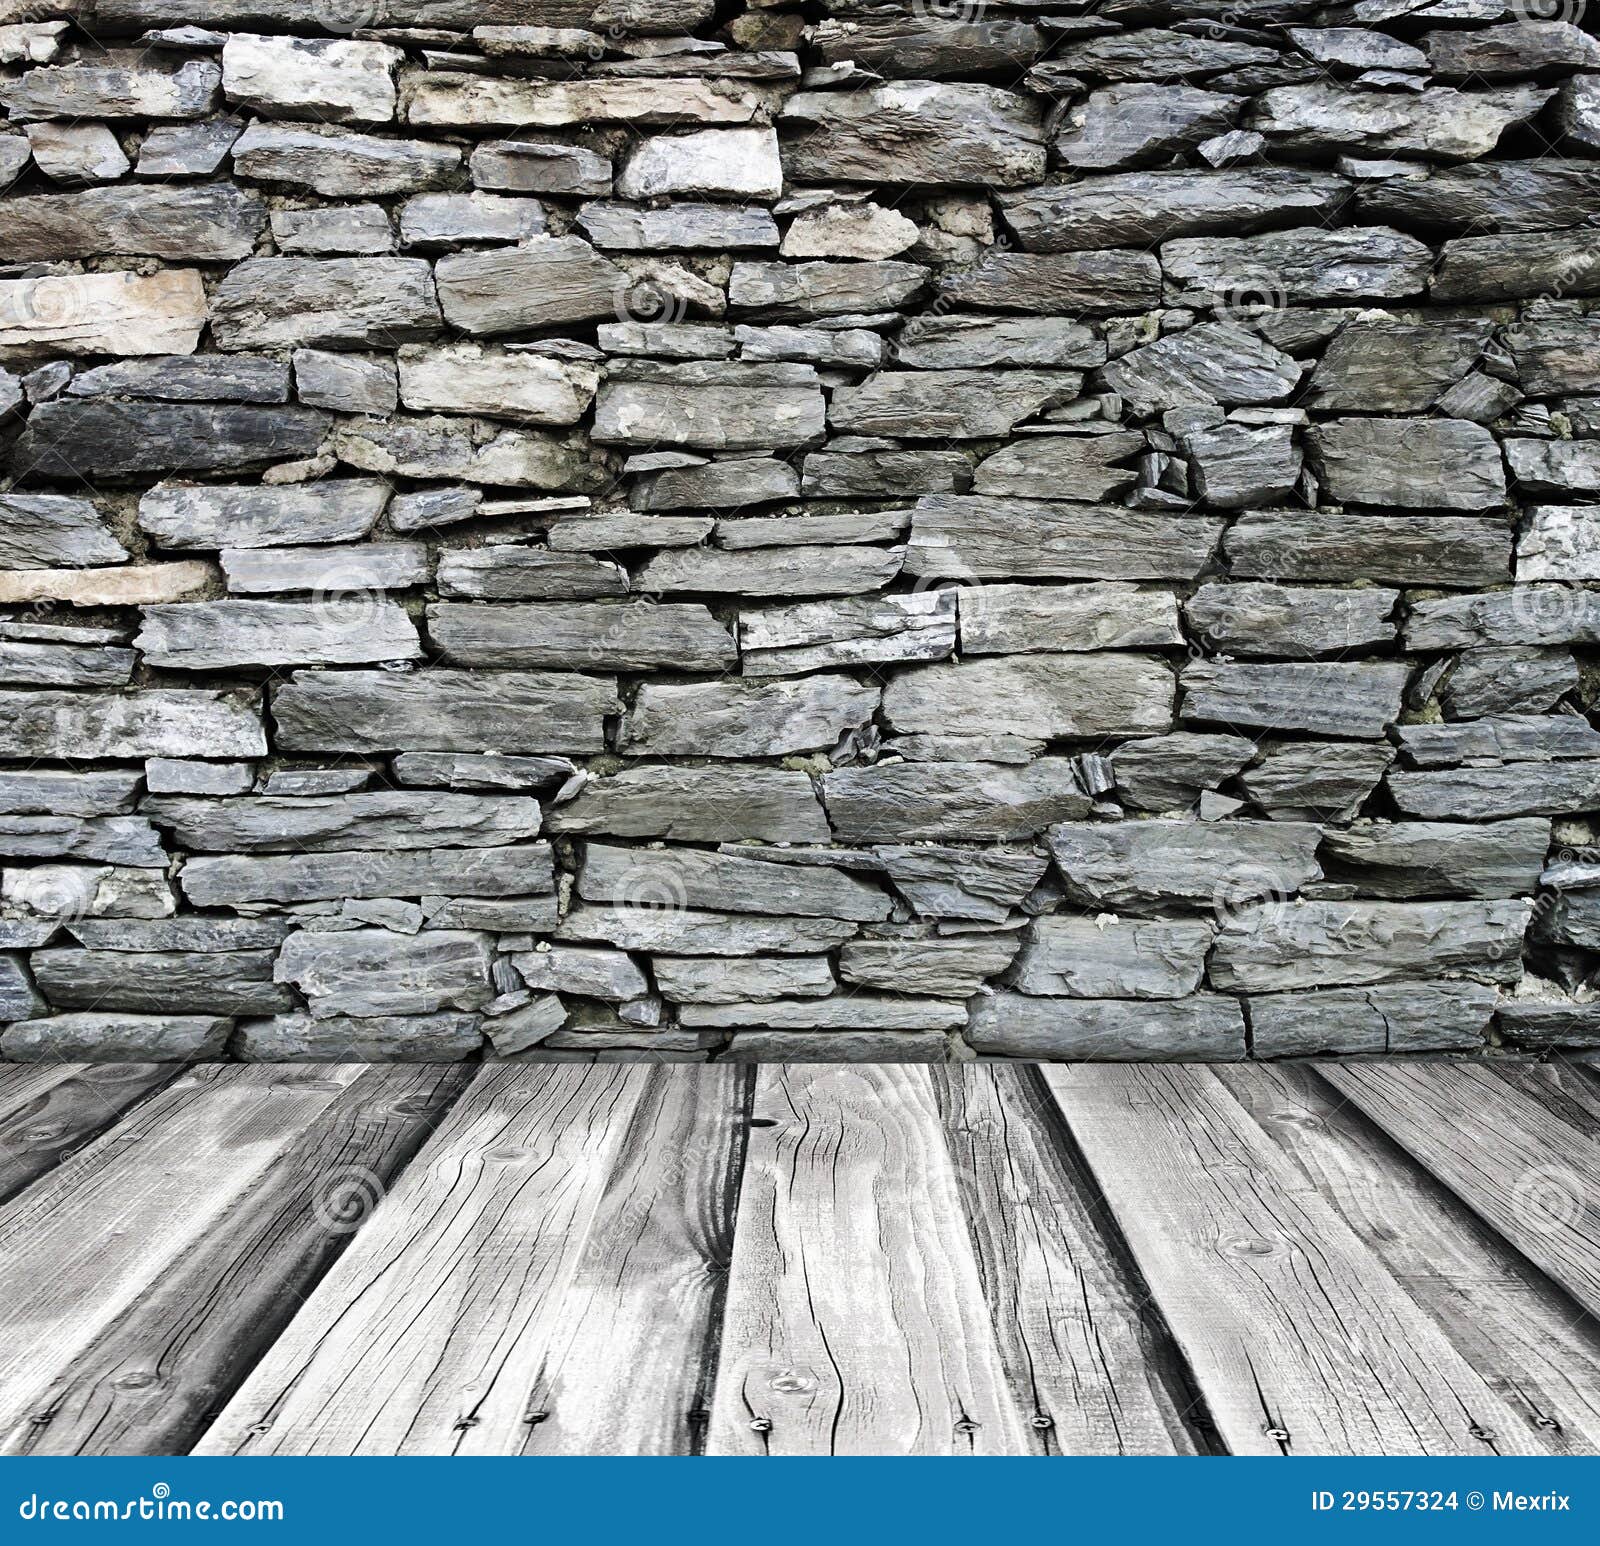 Brick wall interior stock photo. Image of corner, design - 29557324